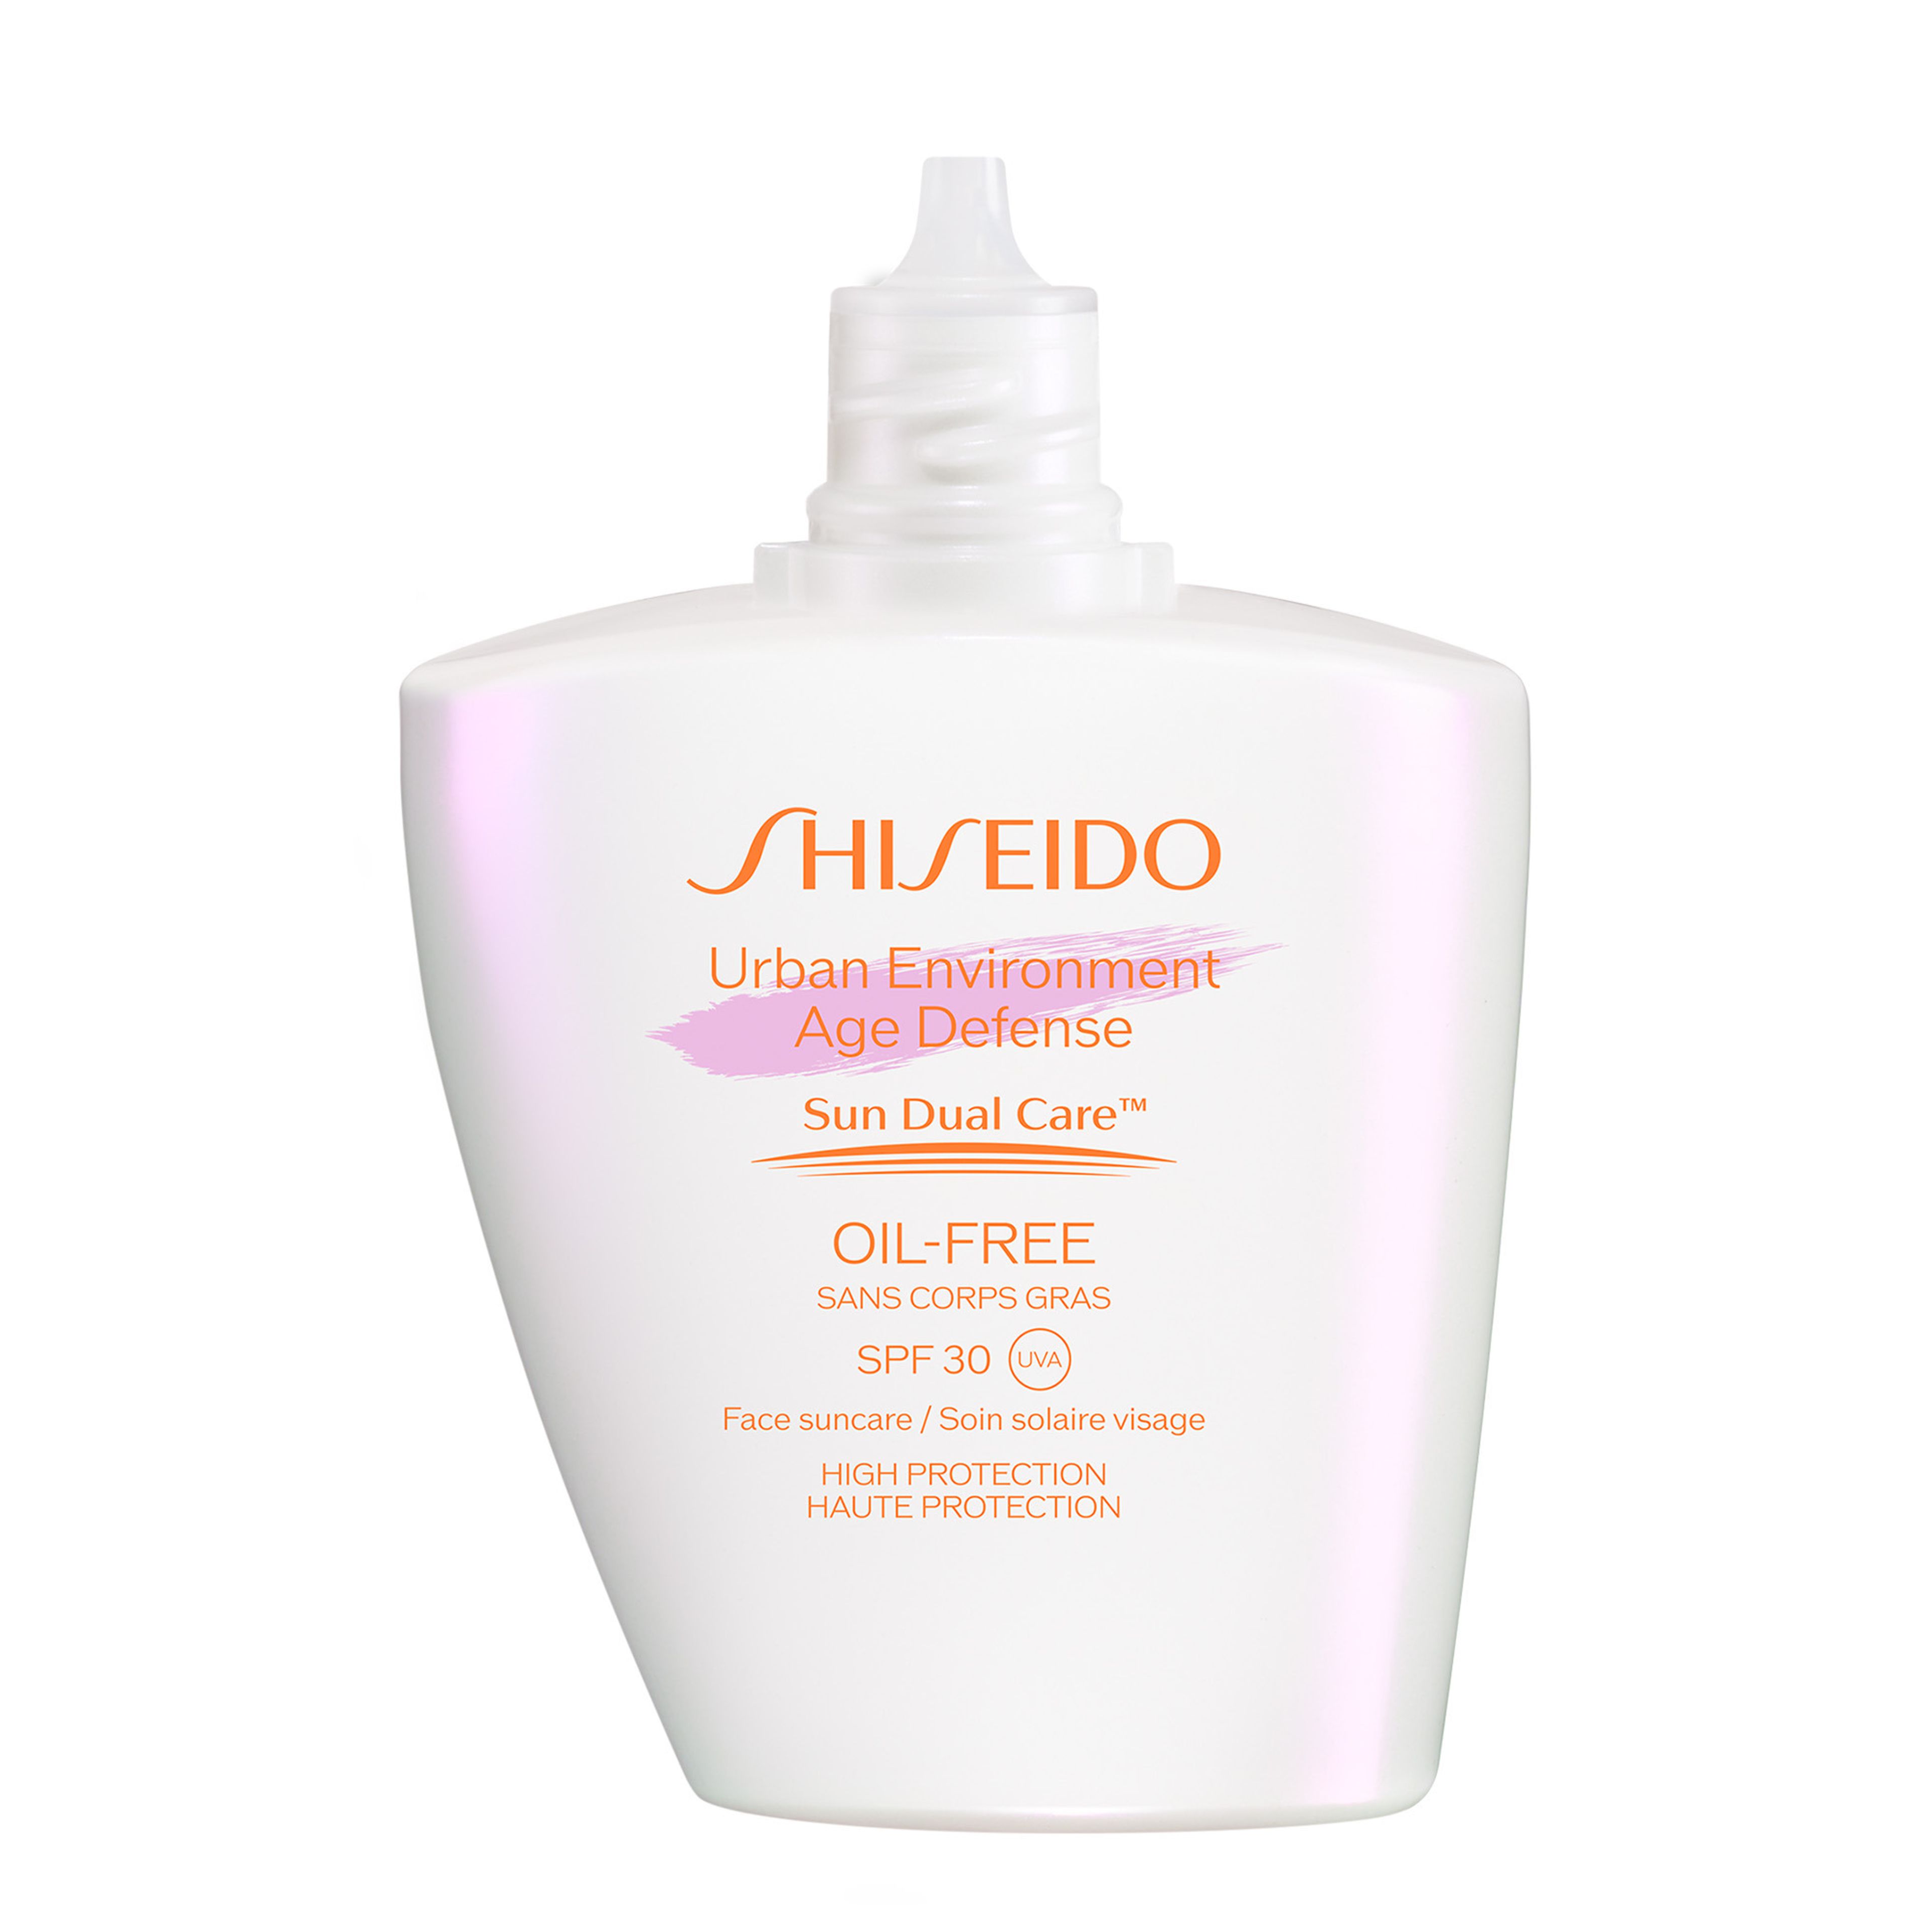 Urban Environment Age Defense Oil-free Spf 30 Shiseido 2